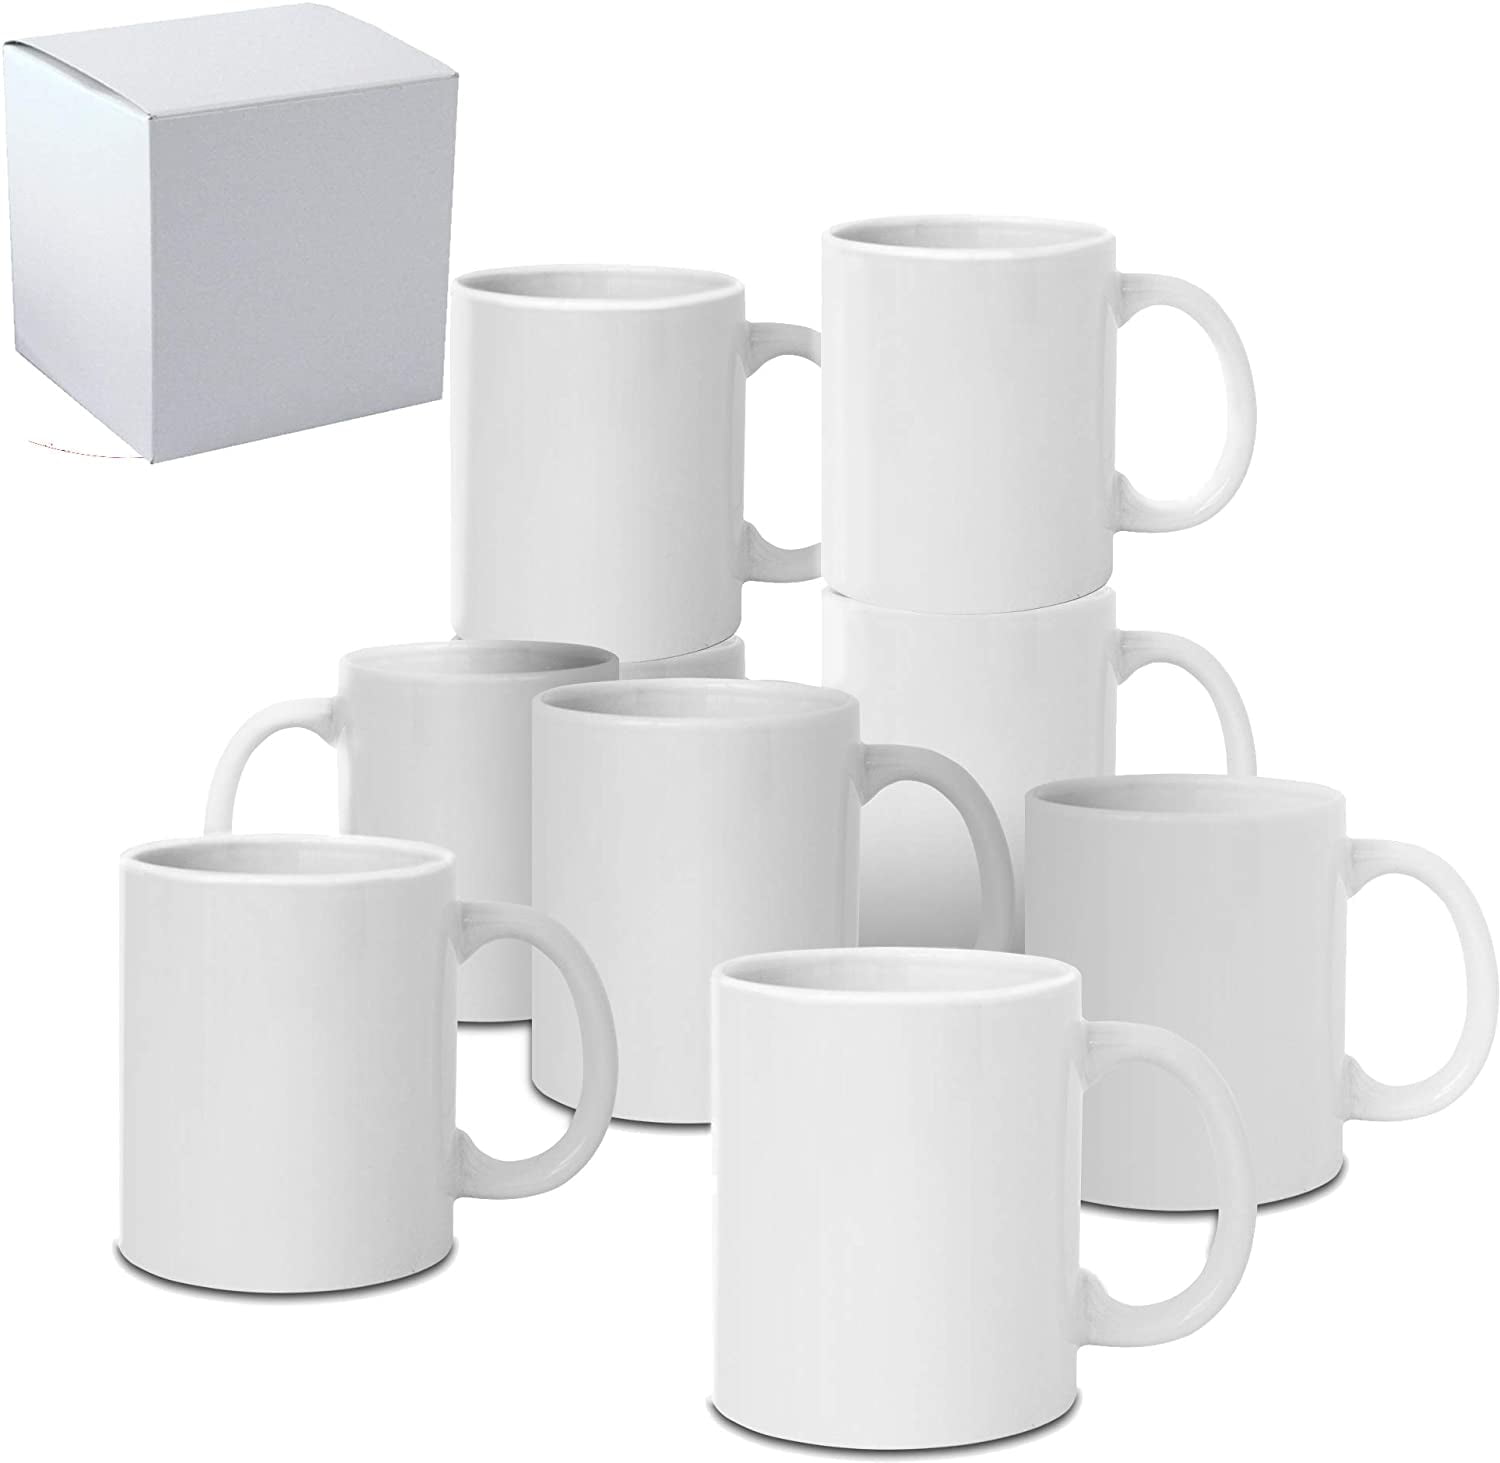 Aka Coffee Mug, Sorority Sublimation Coffee Mug, Mug, Coffee Mug, Sippin  Pretty, Greek Mug, Hbcu, Ceramic Novelty Coffee Mugs 11oz, 15oz Mug, Tea  Cup